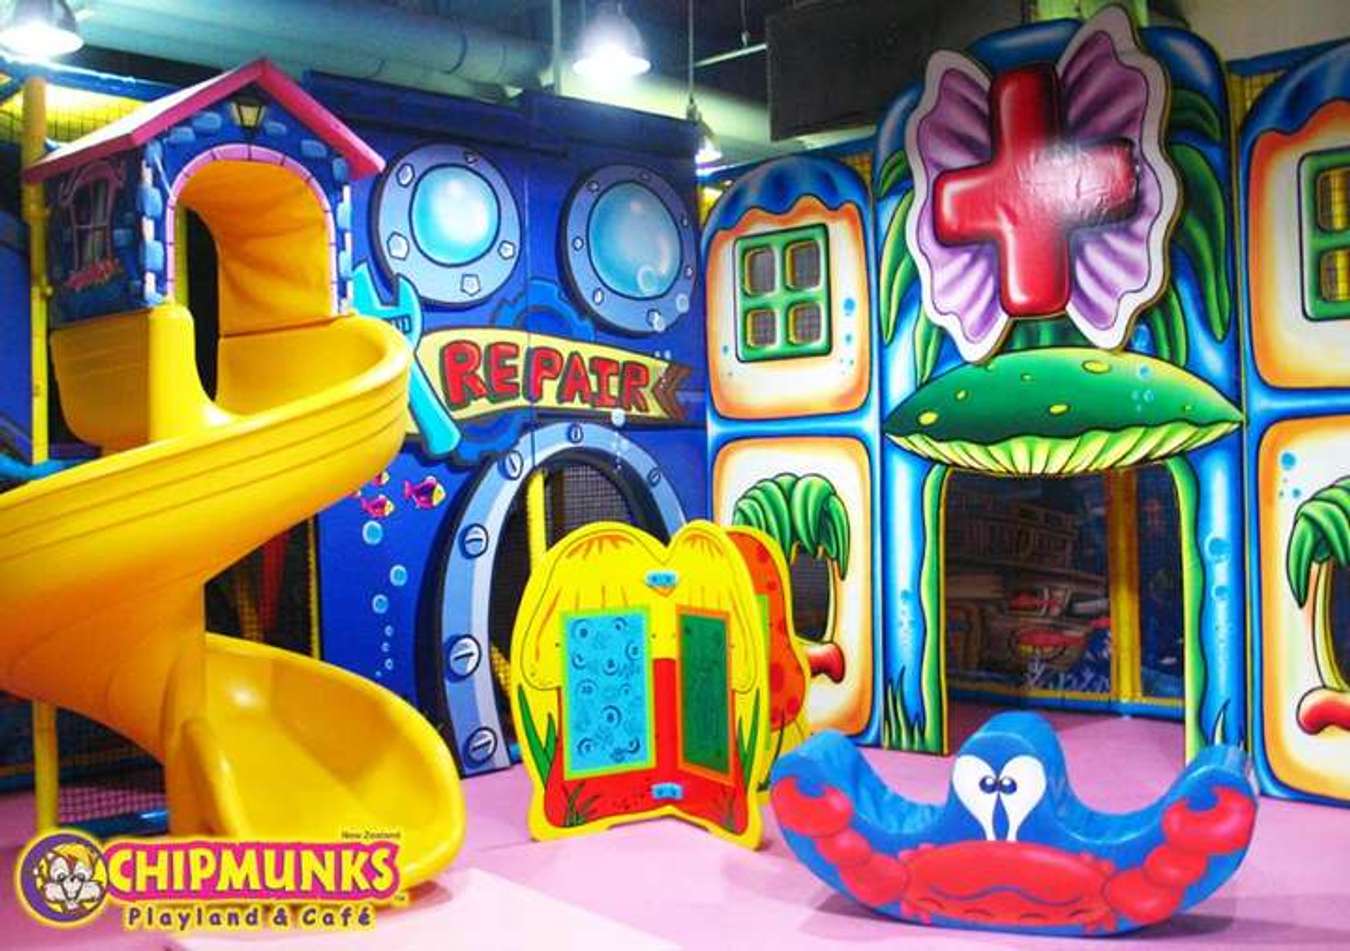 Chipmunks Playland and Cafe - Wisata Anak di Surabaya